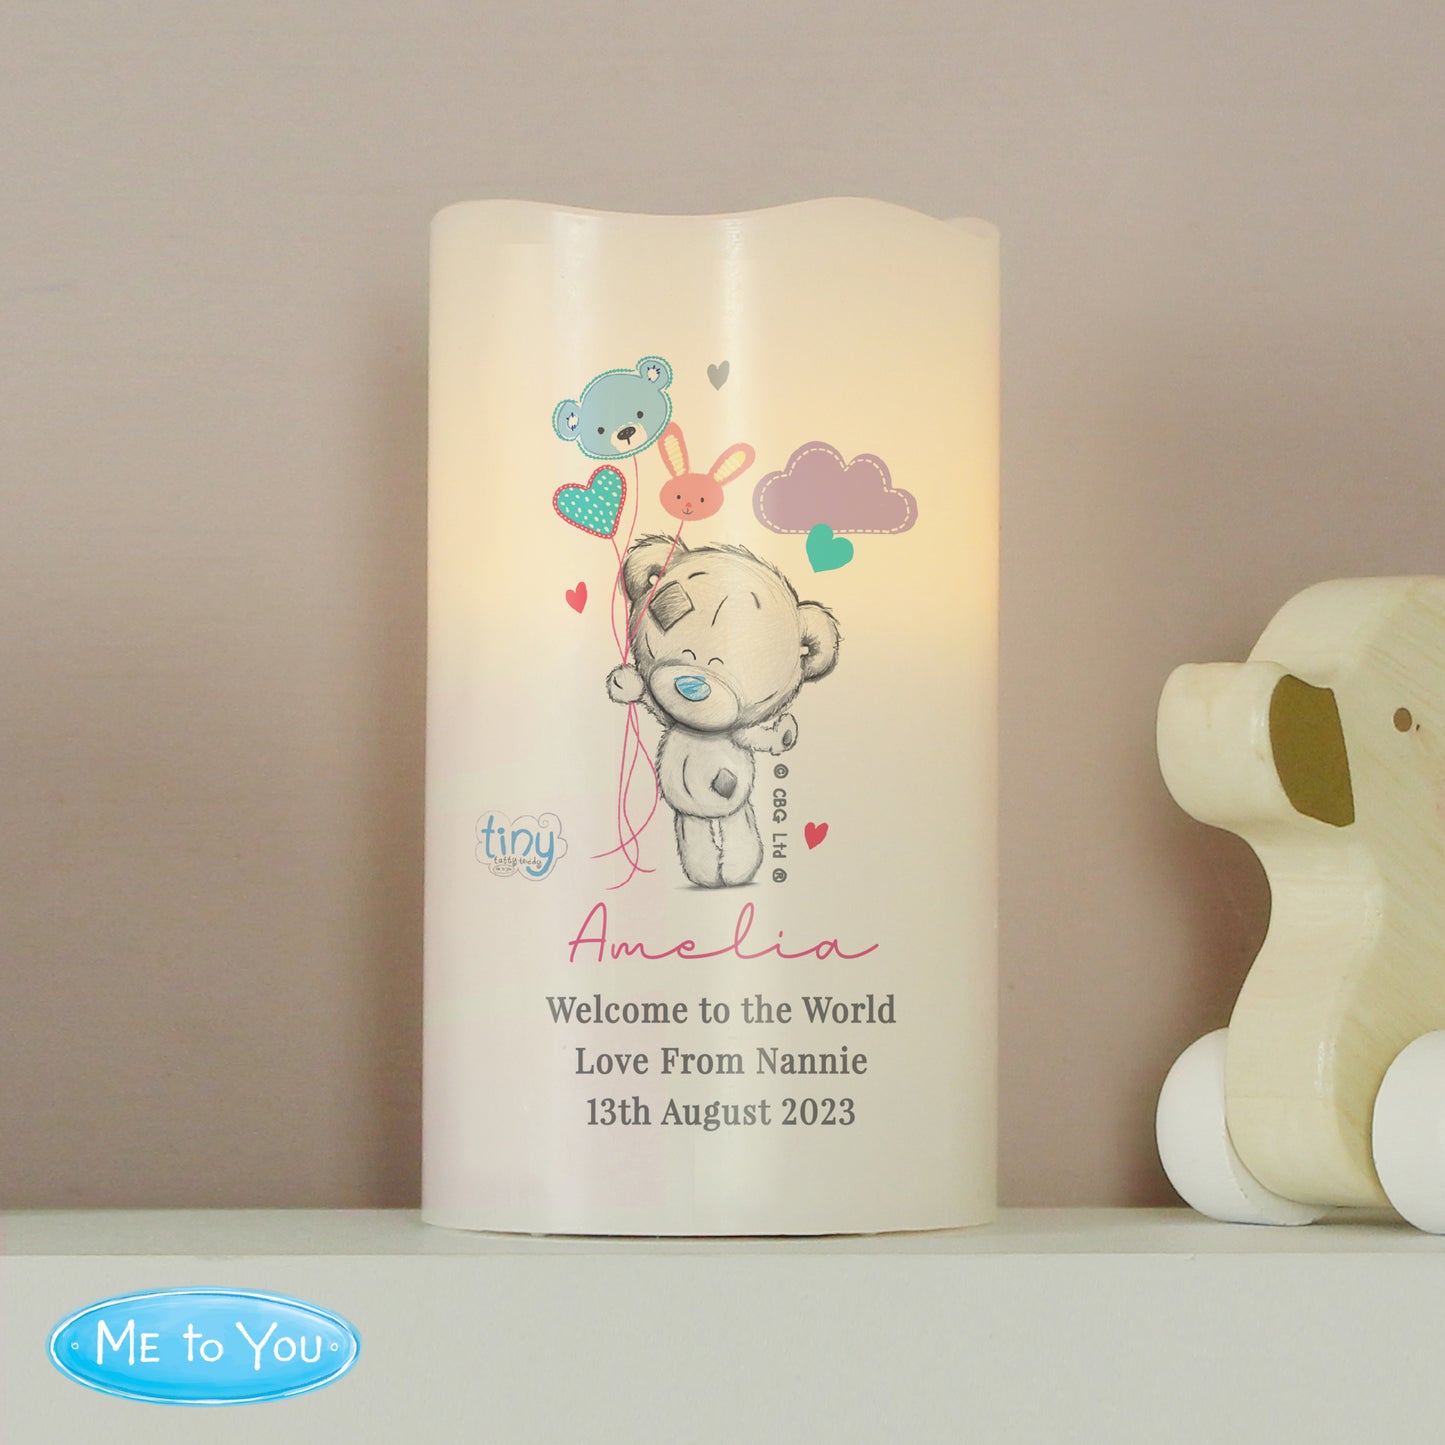 Personalised Tiny Tatty Teddy Dream Big Pink Nightlight LED Candle